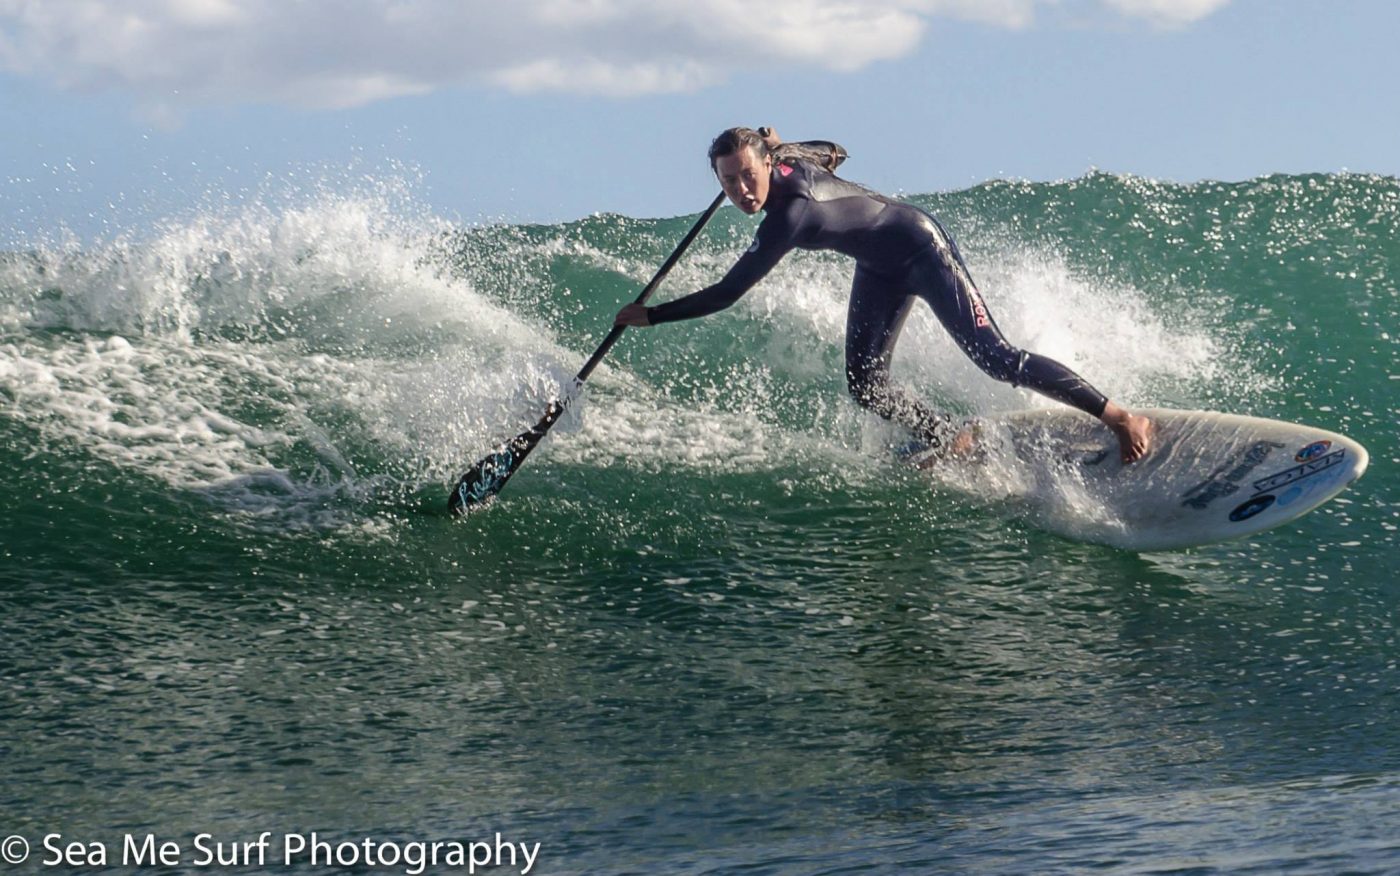 Kristiana surfing